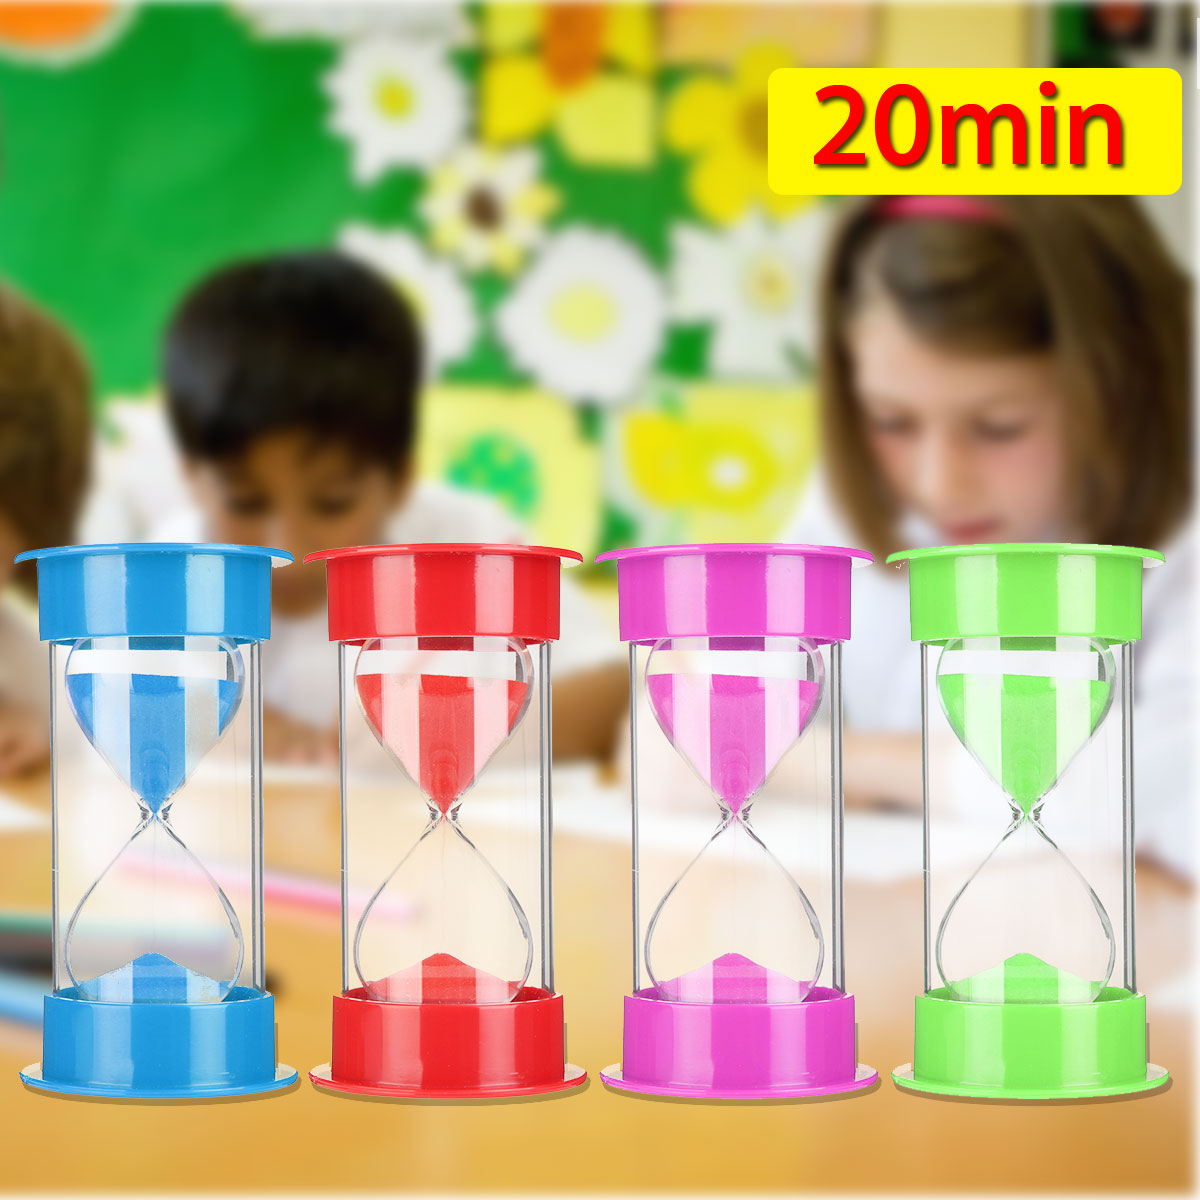 20-Minutes-12cm-Sandglass-Timer-Hourglass-Glass-Sand-Clock-Egg-Kid-Decor-Gift-1546465-2